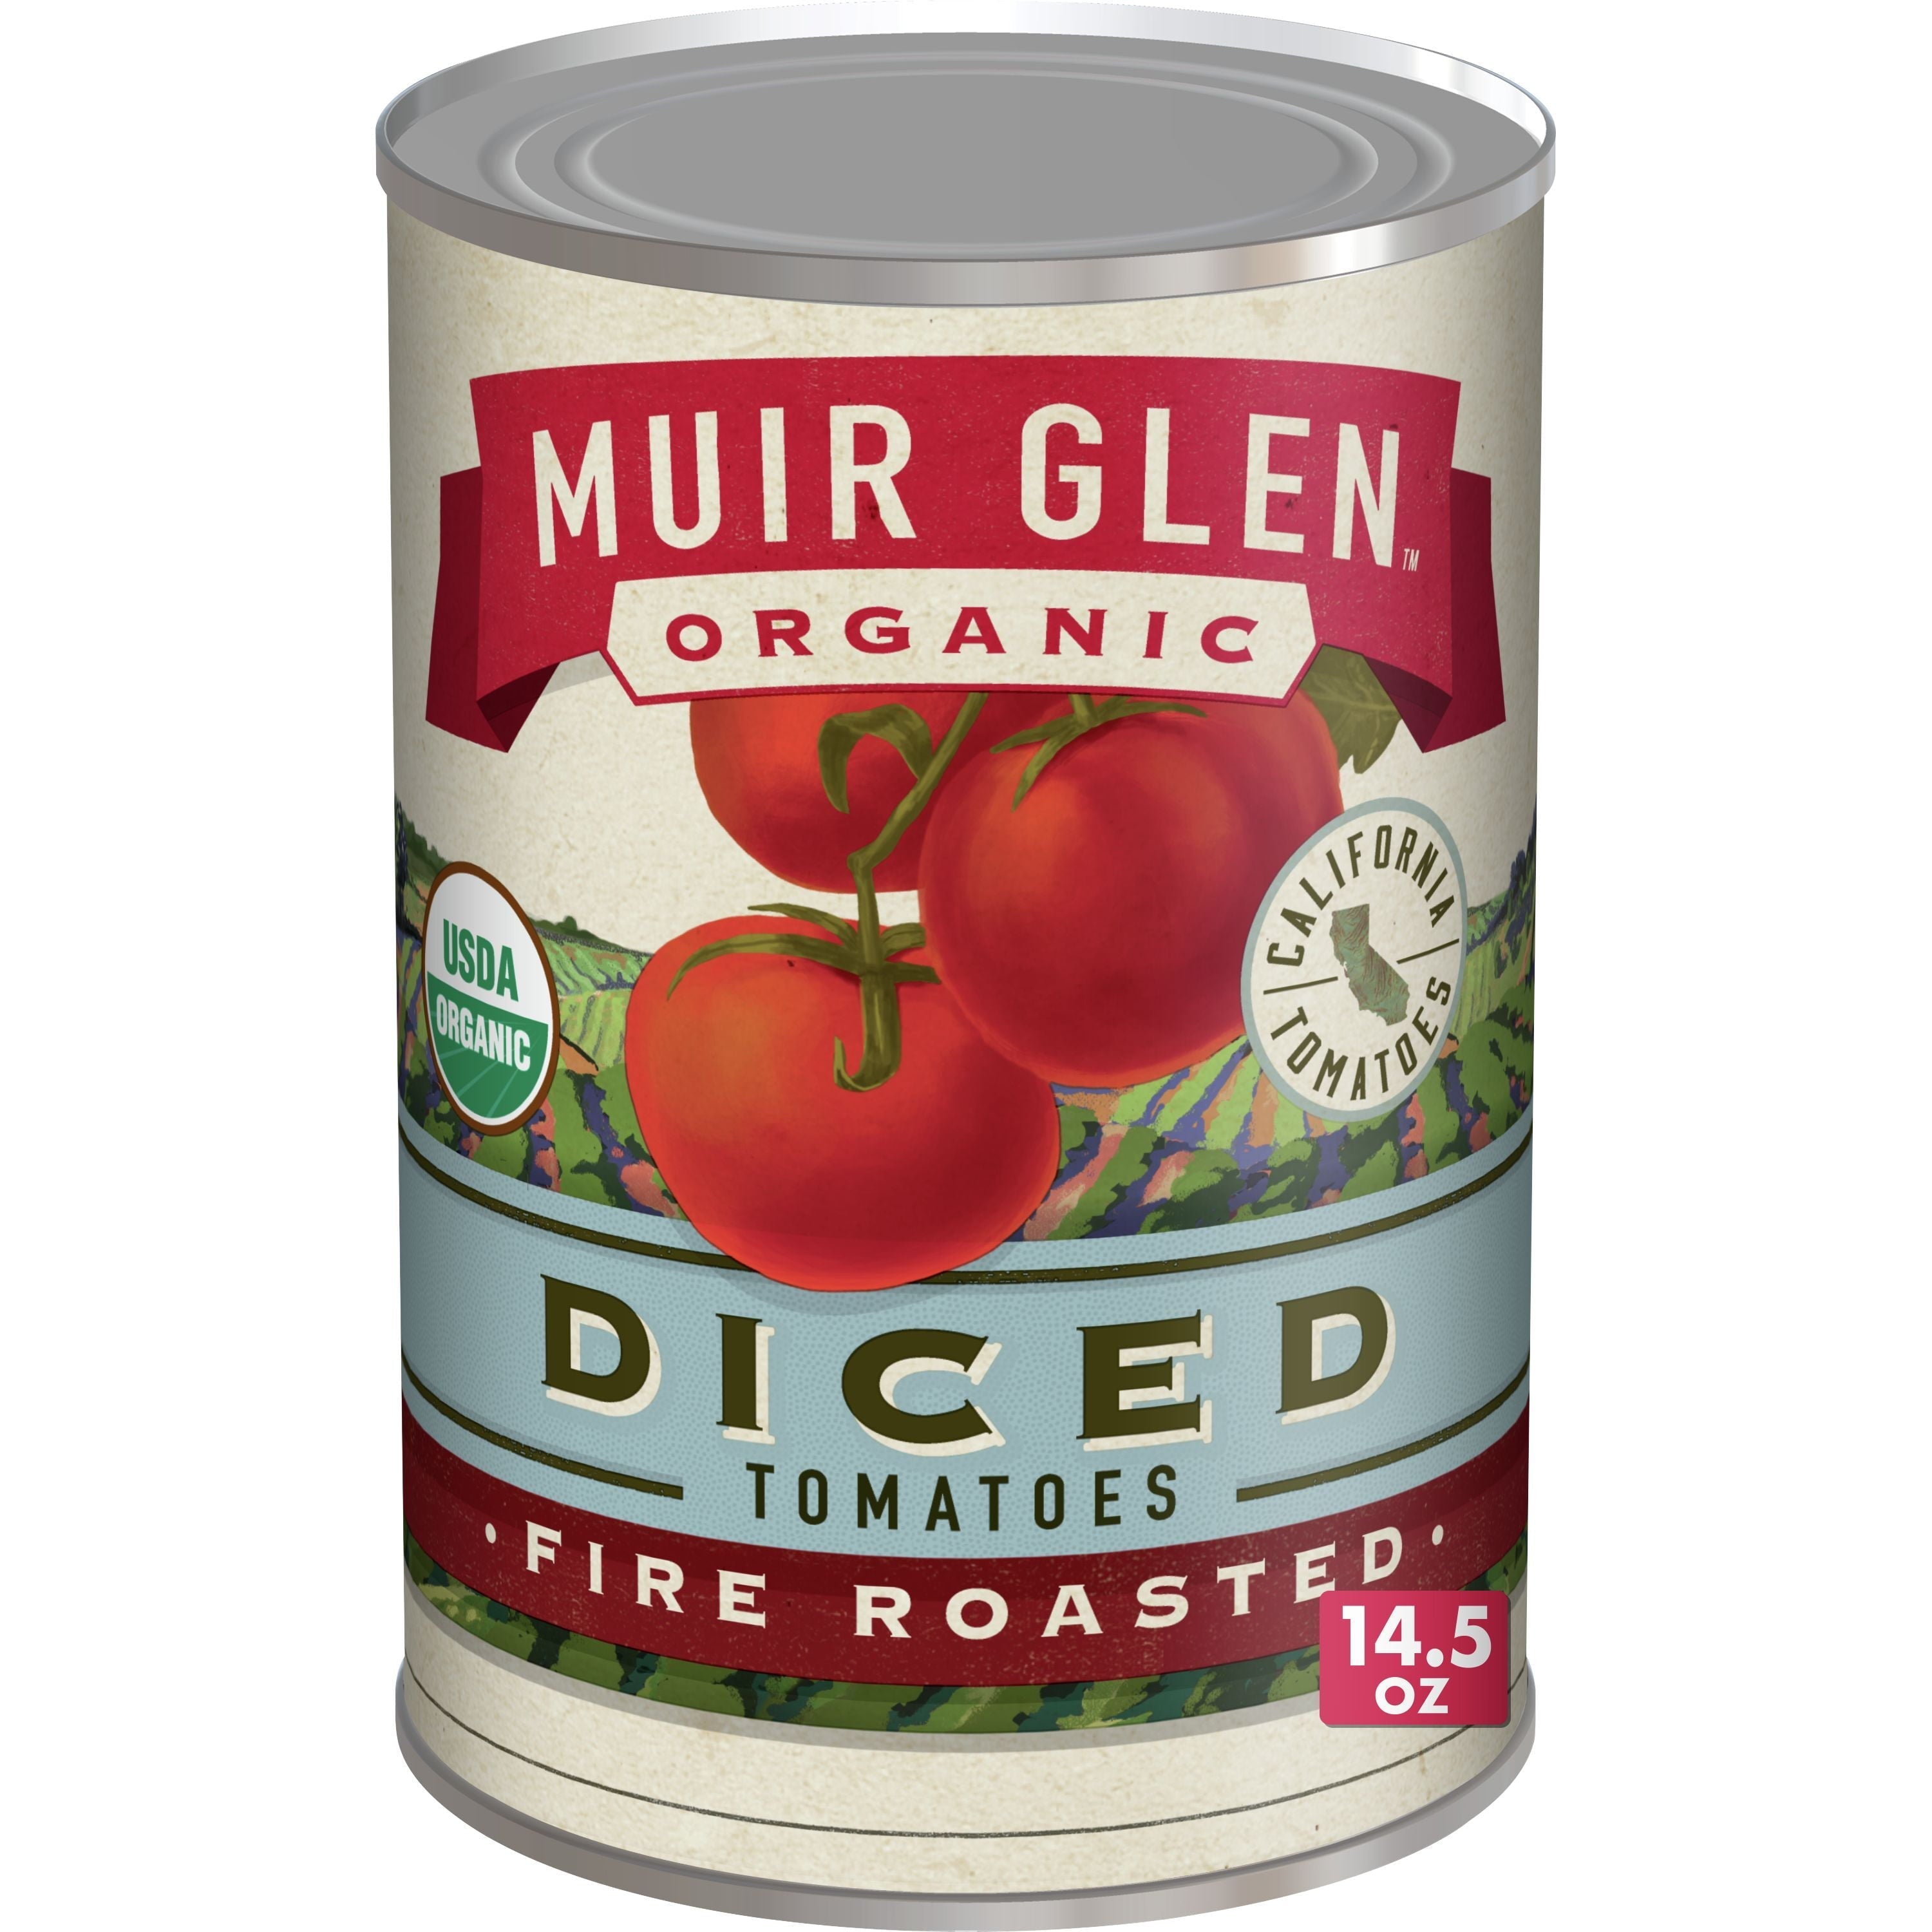 Muir Glen Organic Diced Tomatoes Fire Roasted 14.5 Oz